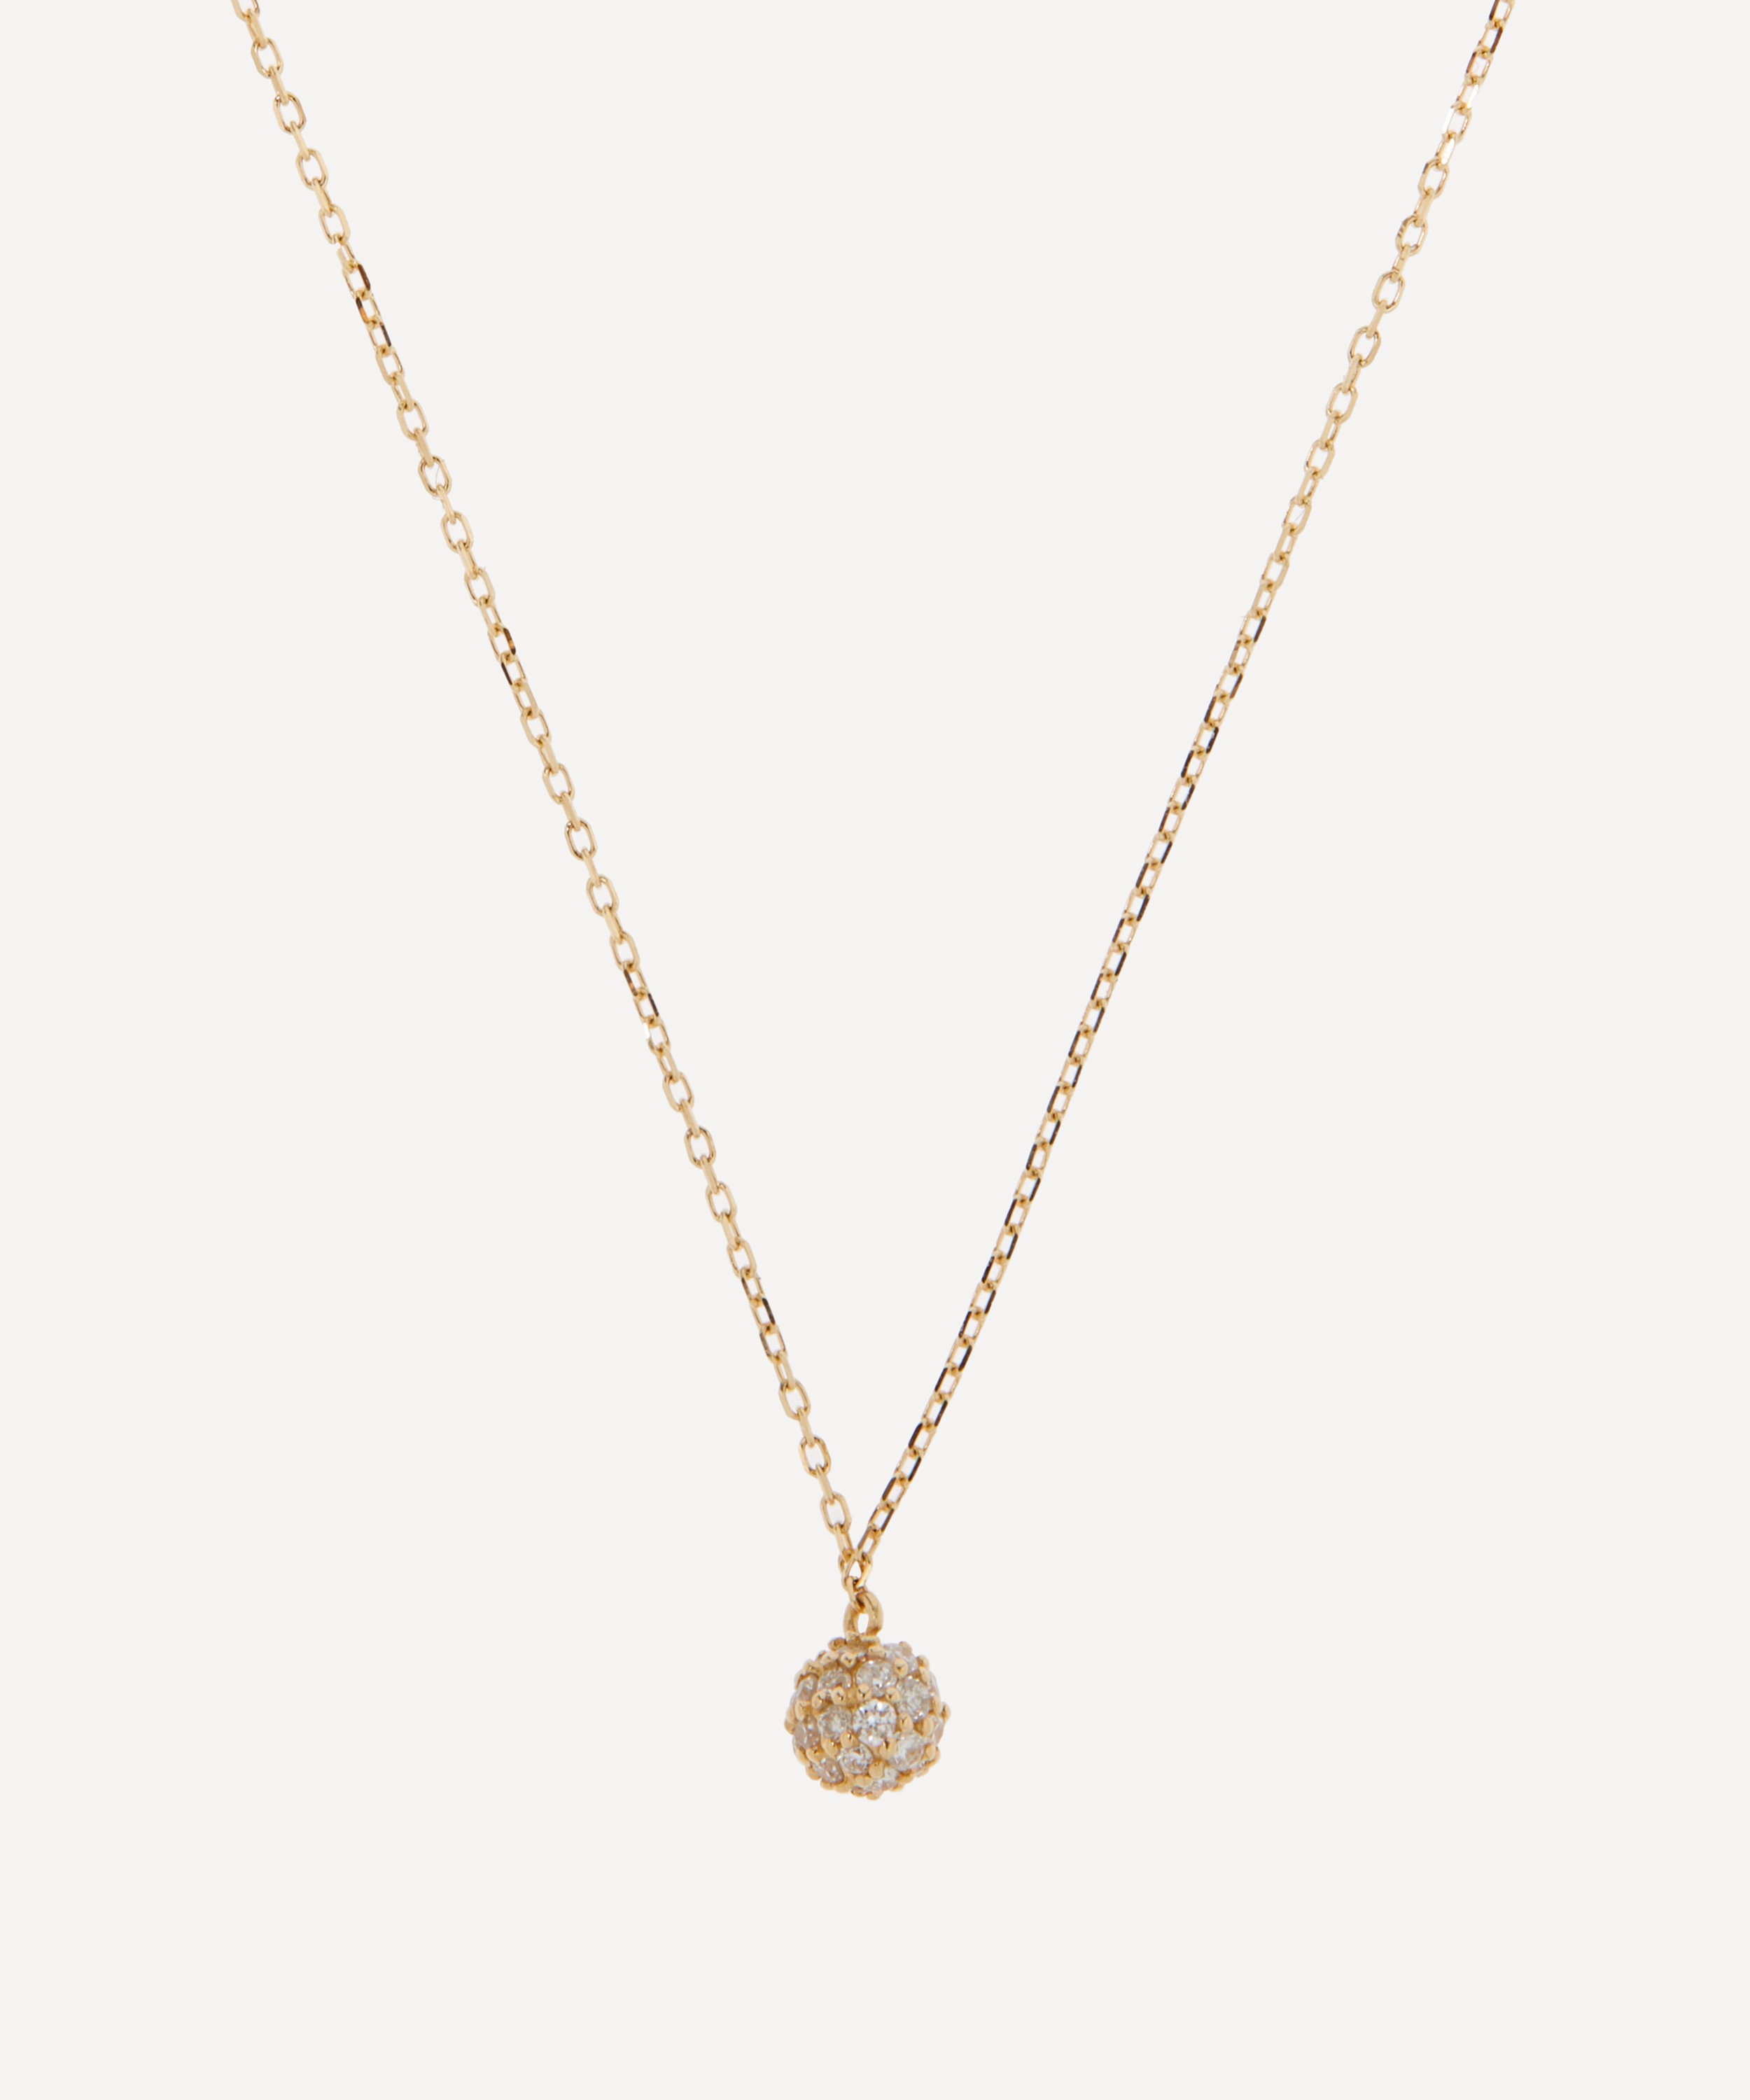 Mateo - 14ct Gold Diamond Ball Pendant Necklace